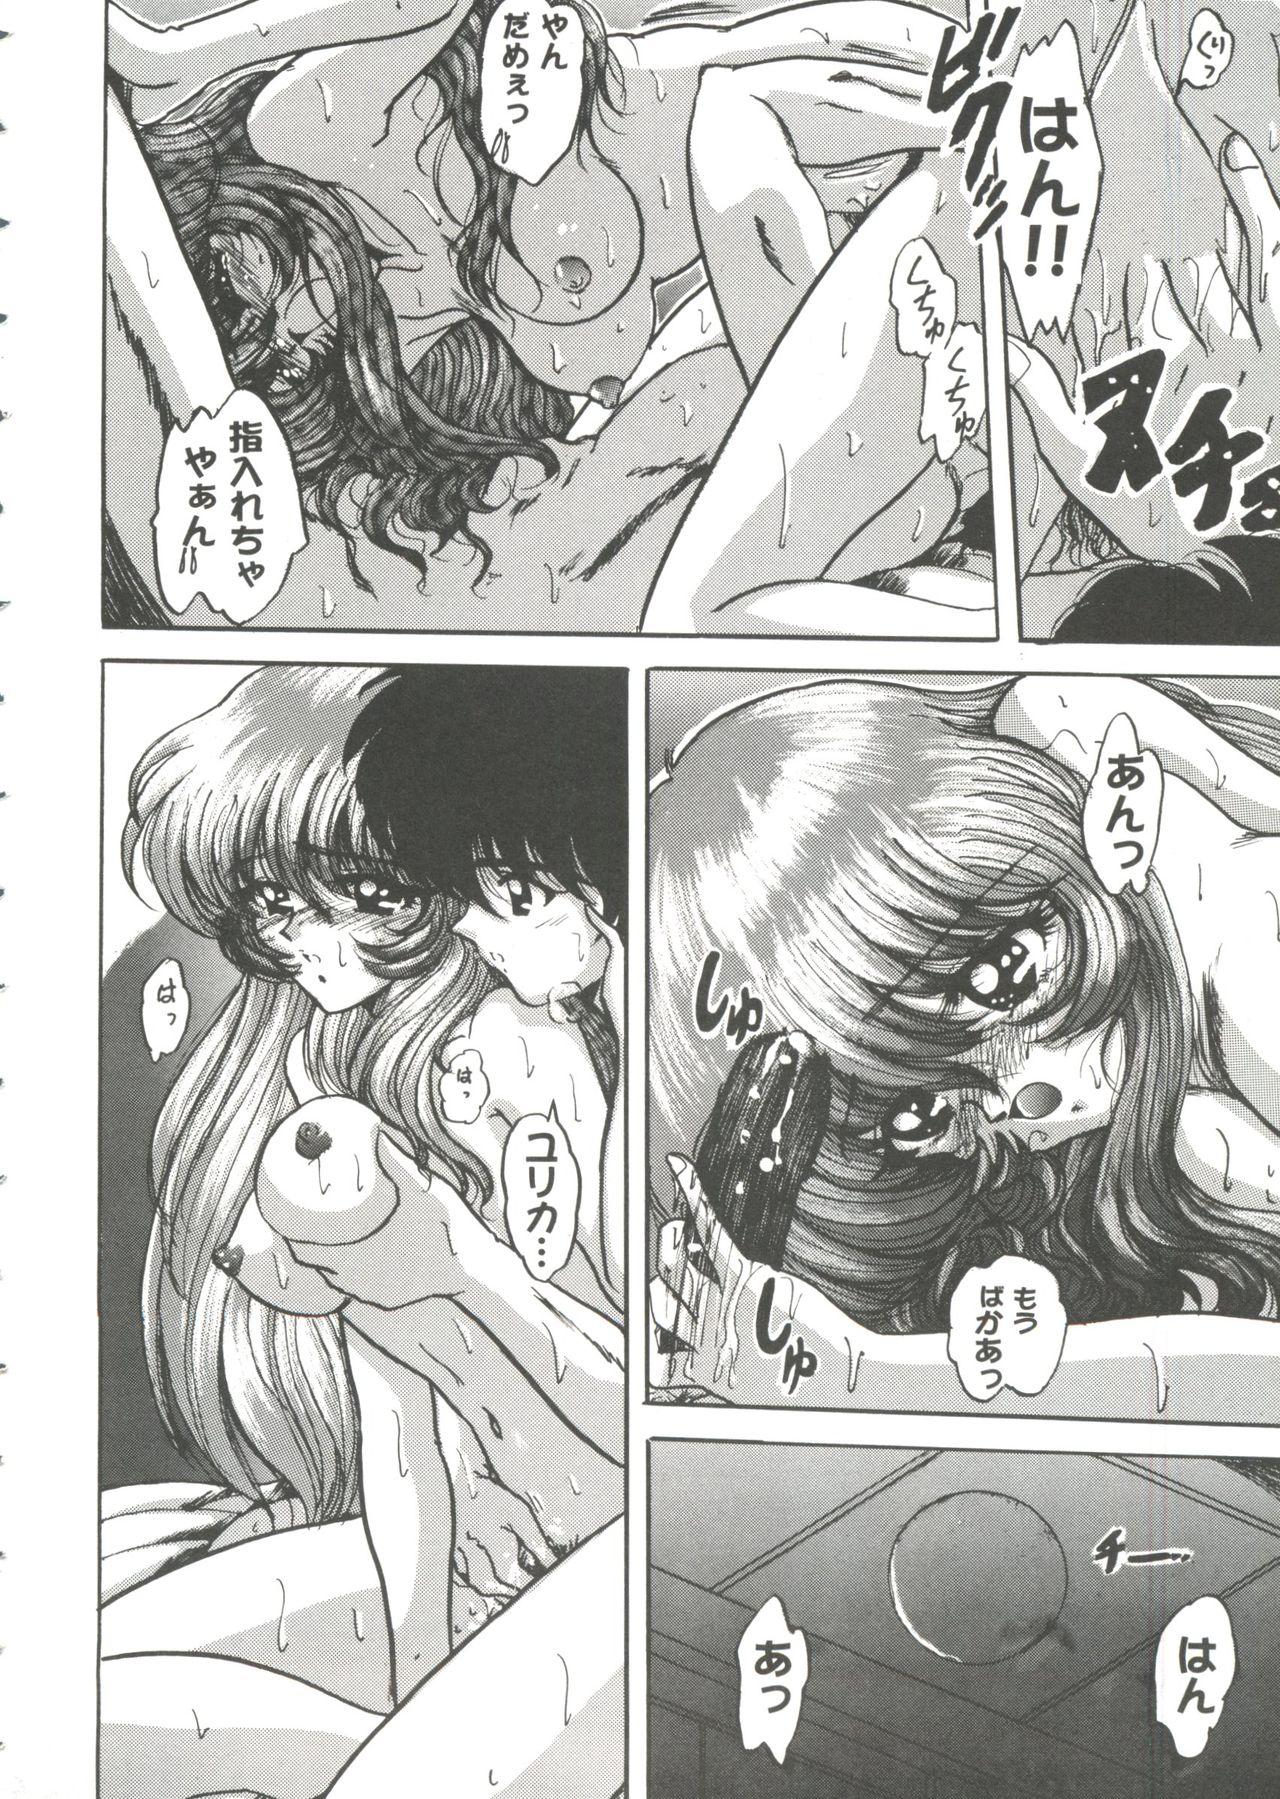 Classic Girl's Parade 99 Cut 7 - Sakura taisen Martian successor nadesico Rurouni kenshin White album All - Page 8